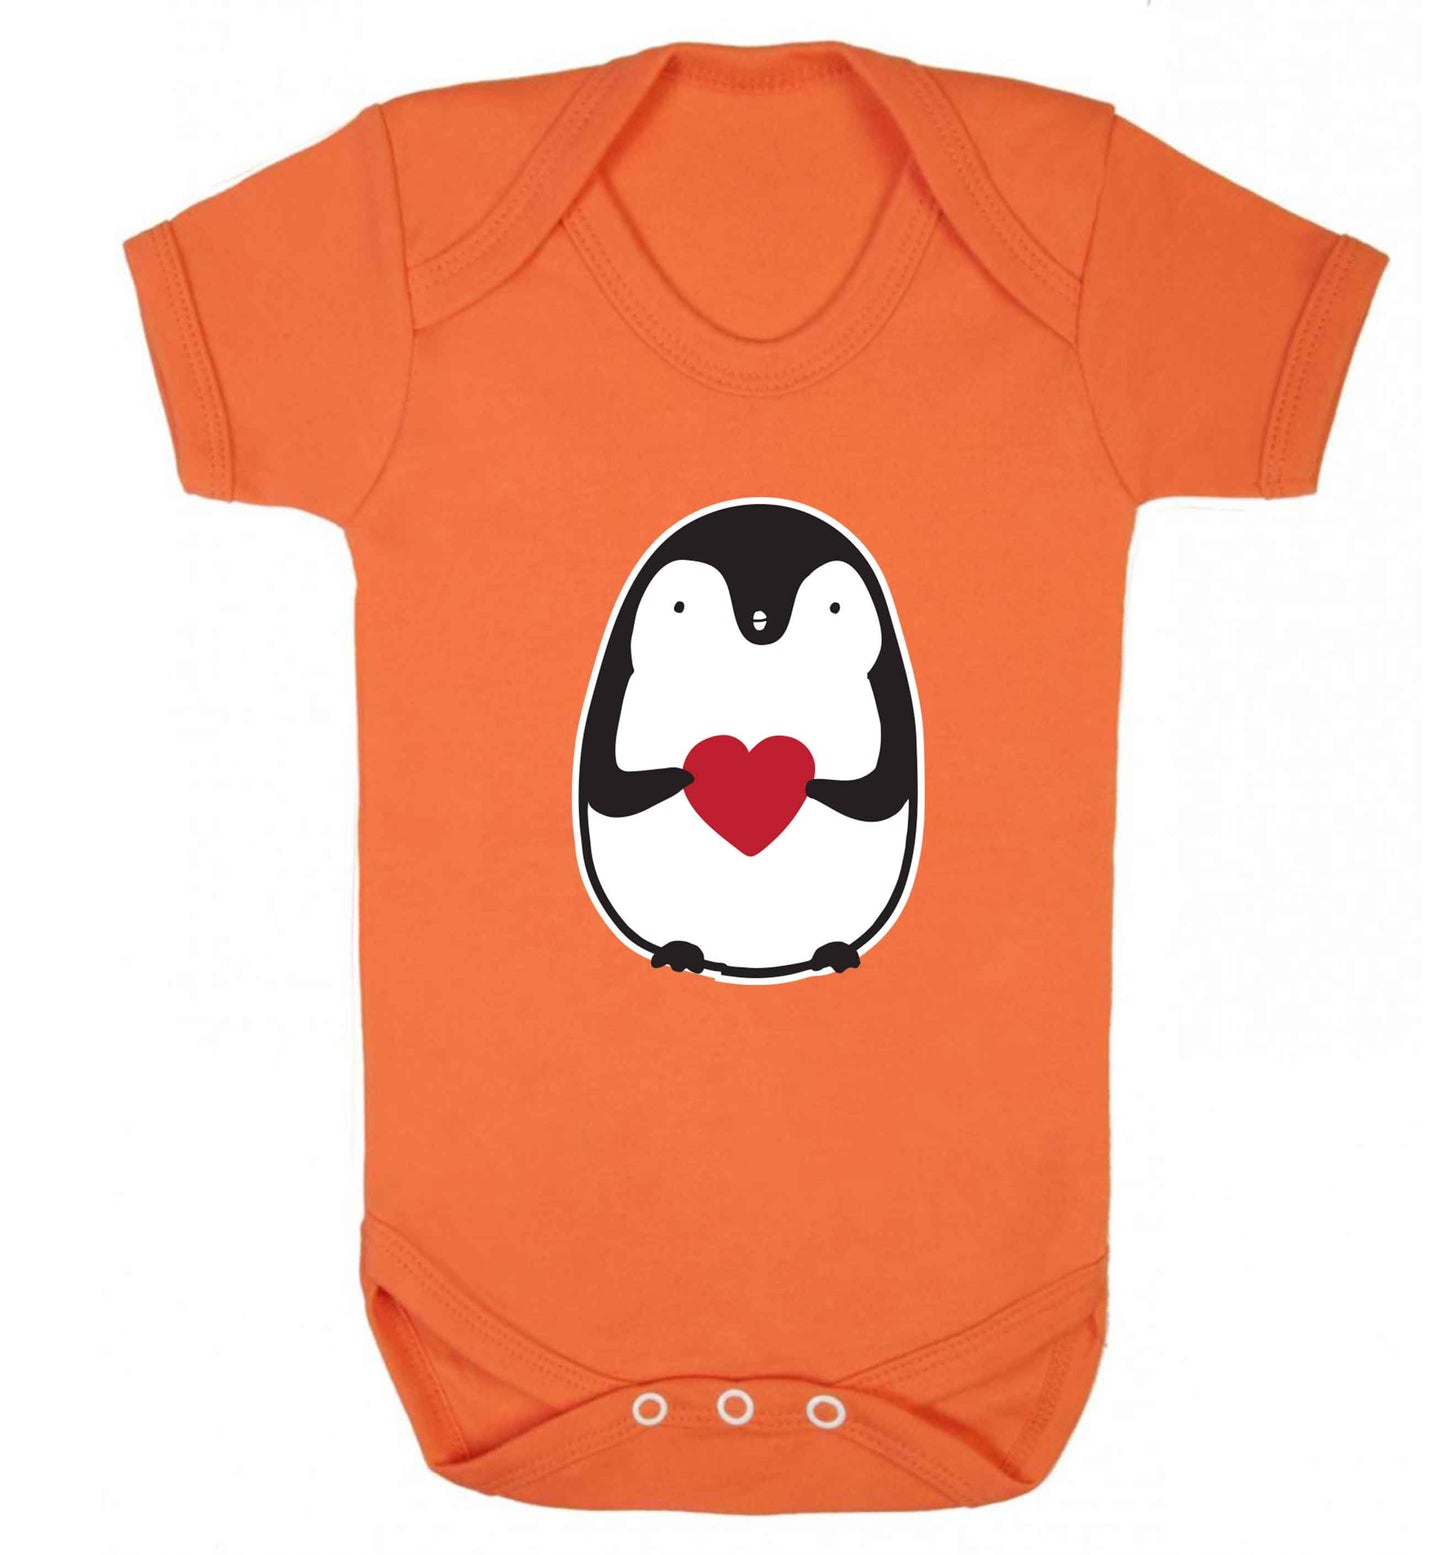 Cute penguin heart baby vest orange 18-24 months